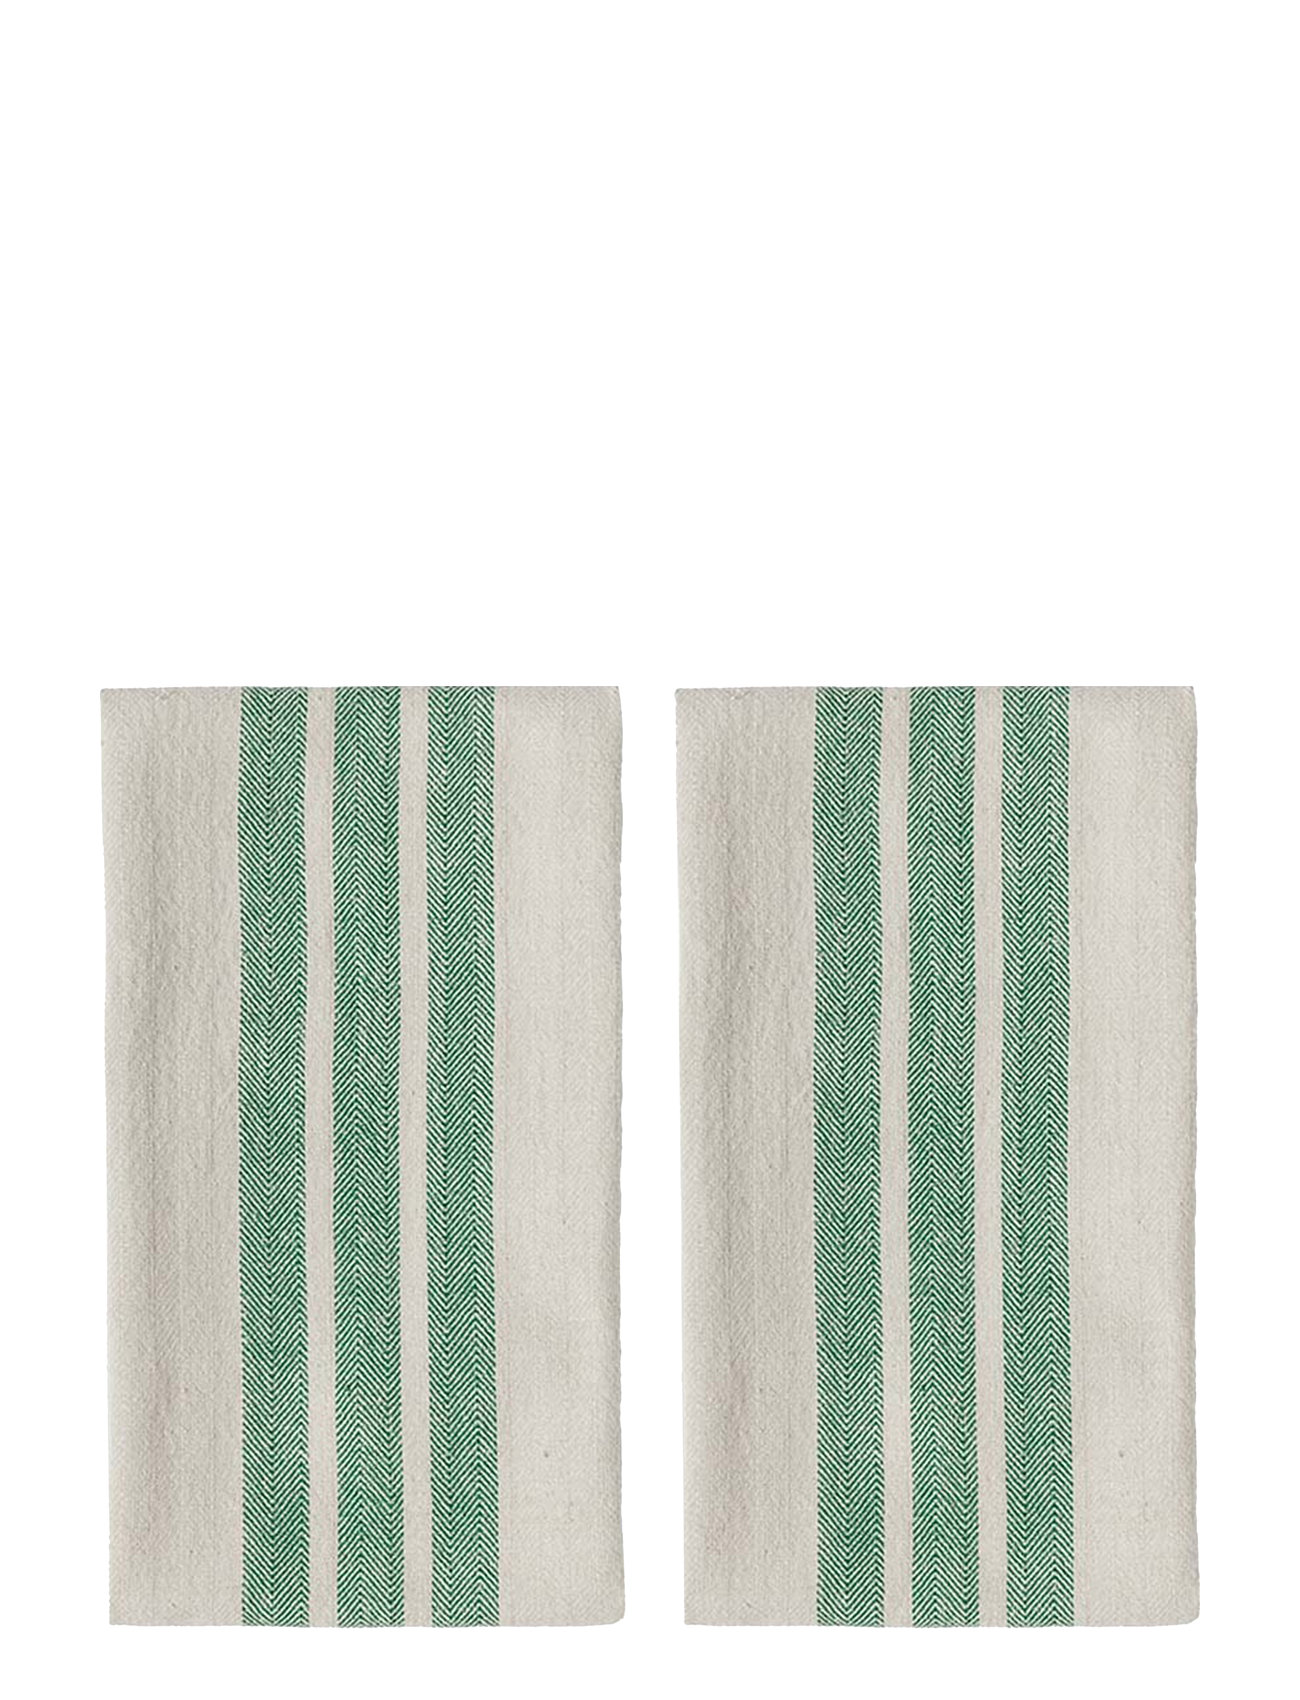 Linu Tea Towel - Pack Of 2 Home Textiles Kitchen Textiles Kitchen Towels Green OYOY Living Design